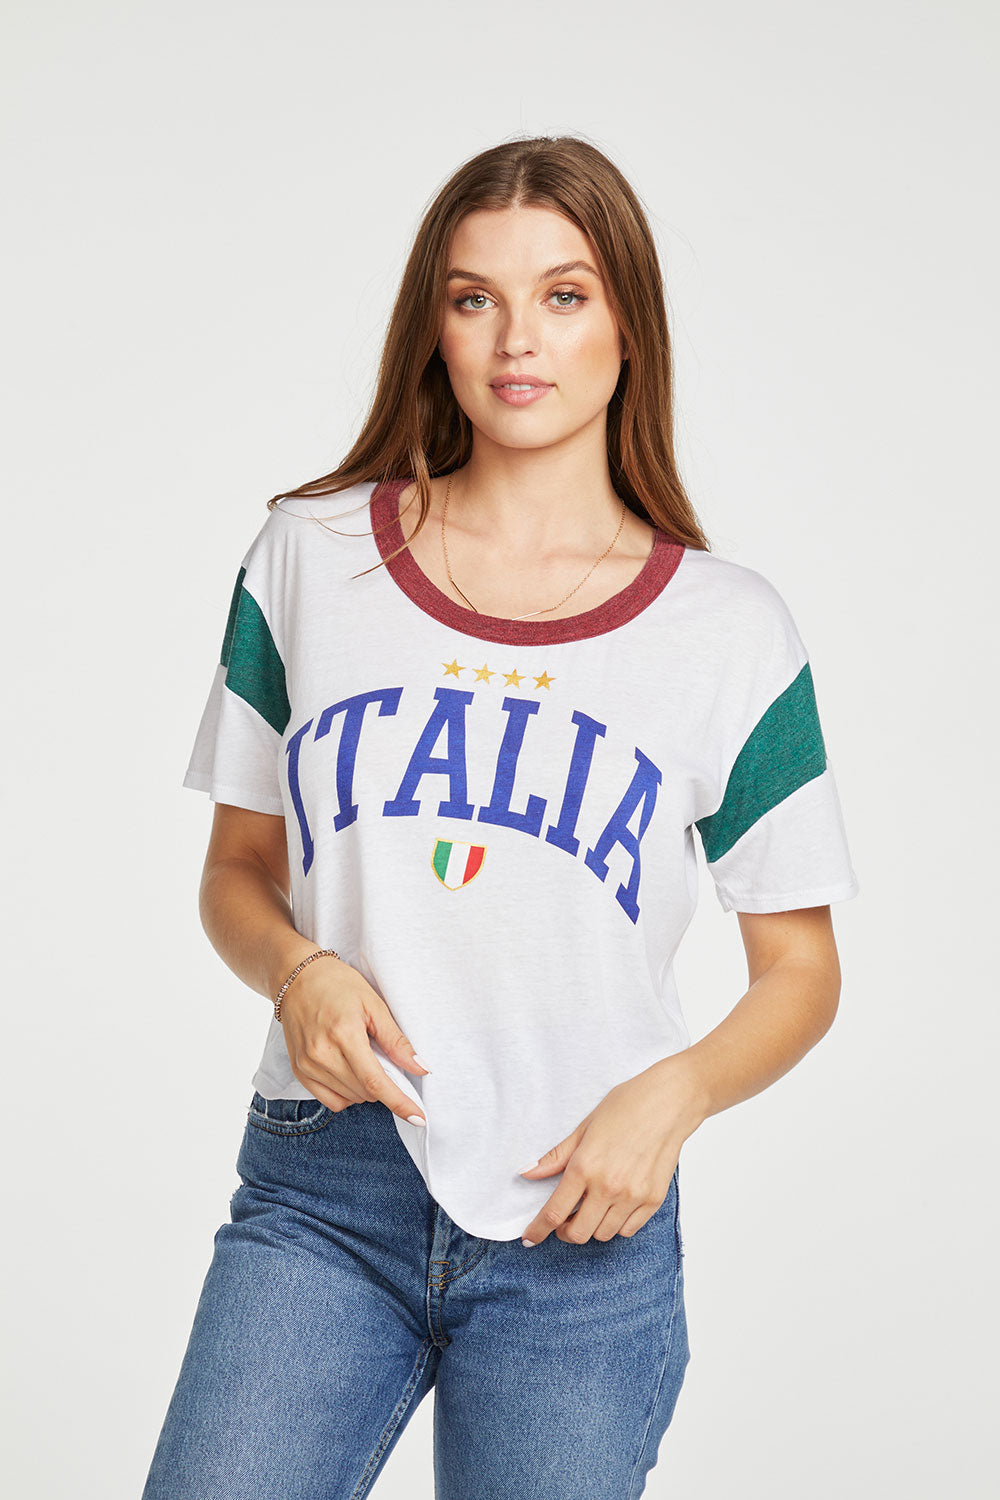 Italia WOMENS - chaserbrand